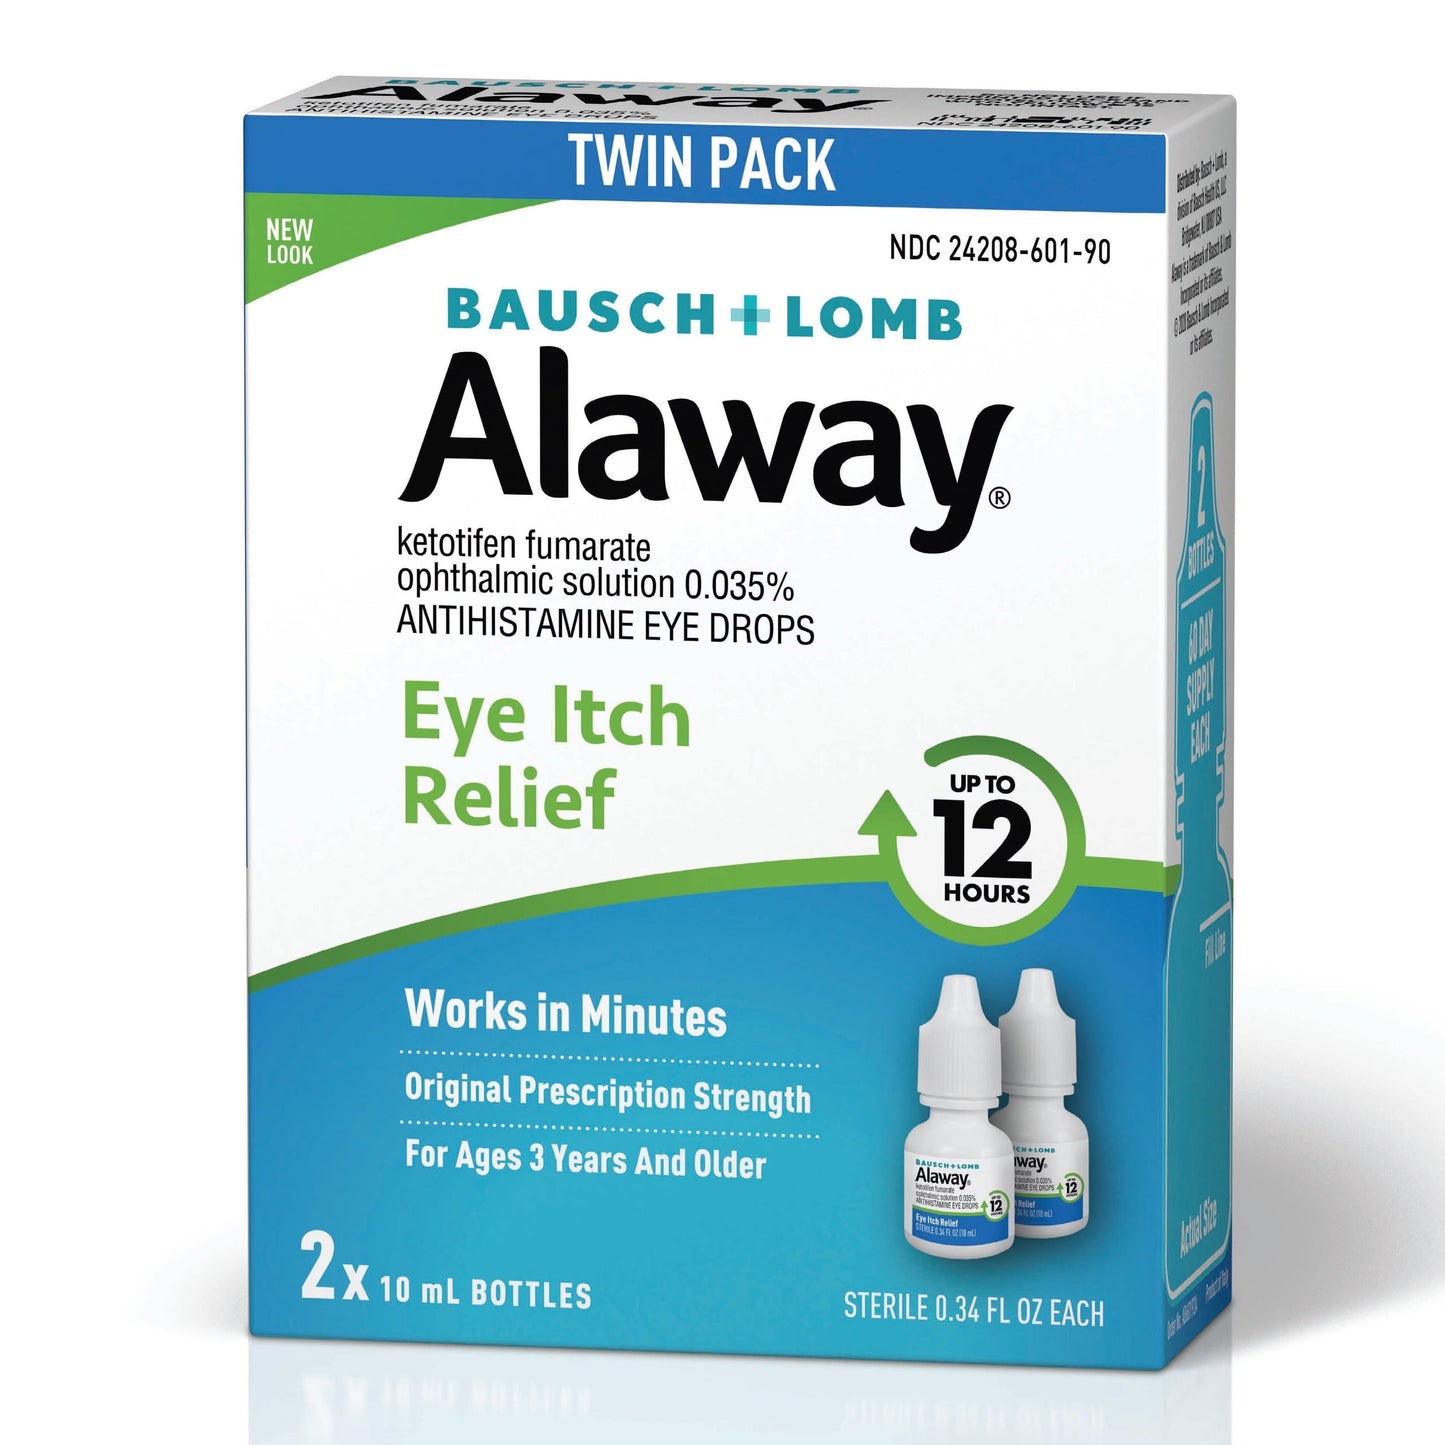 Alaway® Antihistamine Eye Drops, from Bausch + Lomb 0.34 FL OZ, Twin Pack